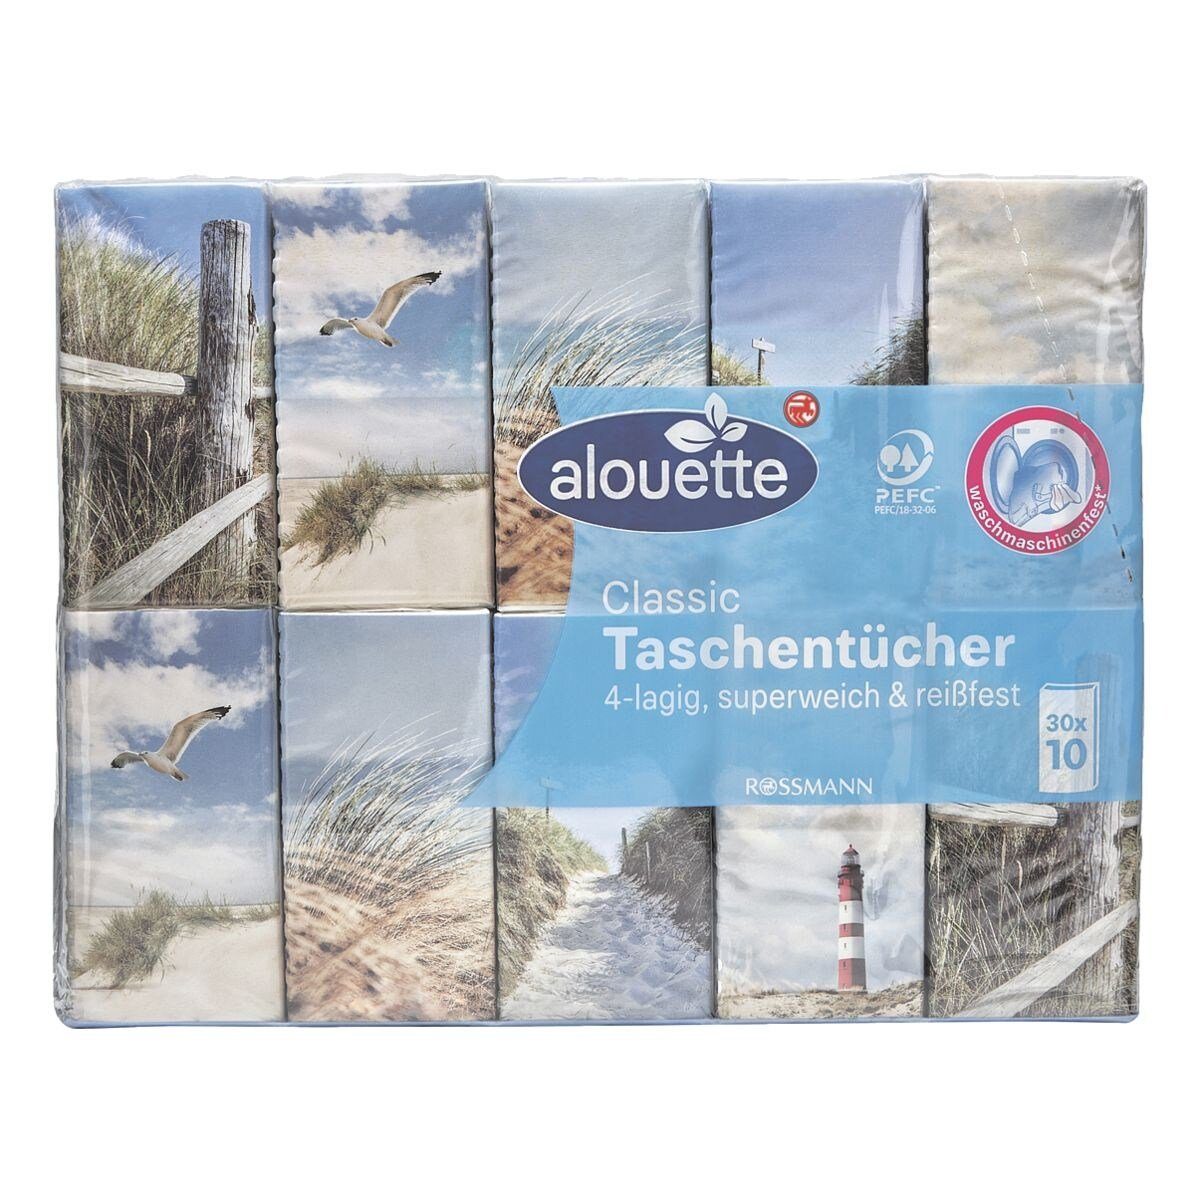 alouette Papiertaschentücher, 4-lagig, weiß, waschmaschinenfest, 30x 10 Платки